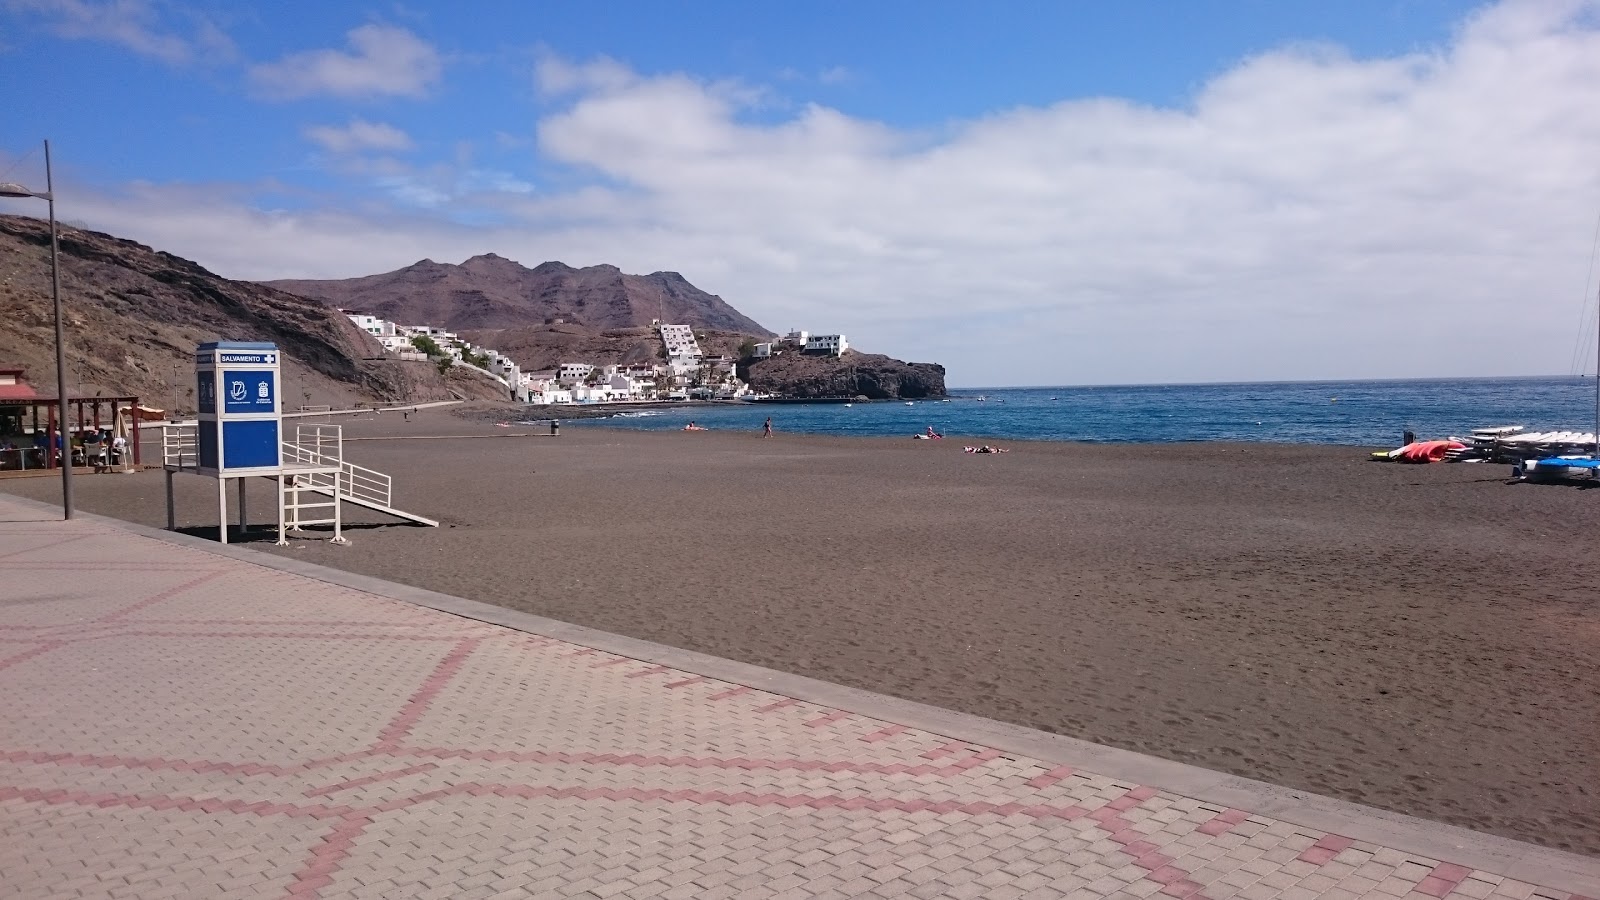 Foto di Playa de los Pobres e l'insediamento